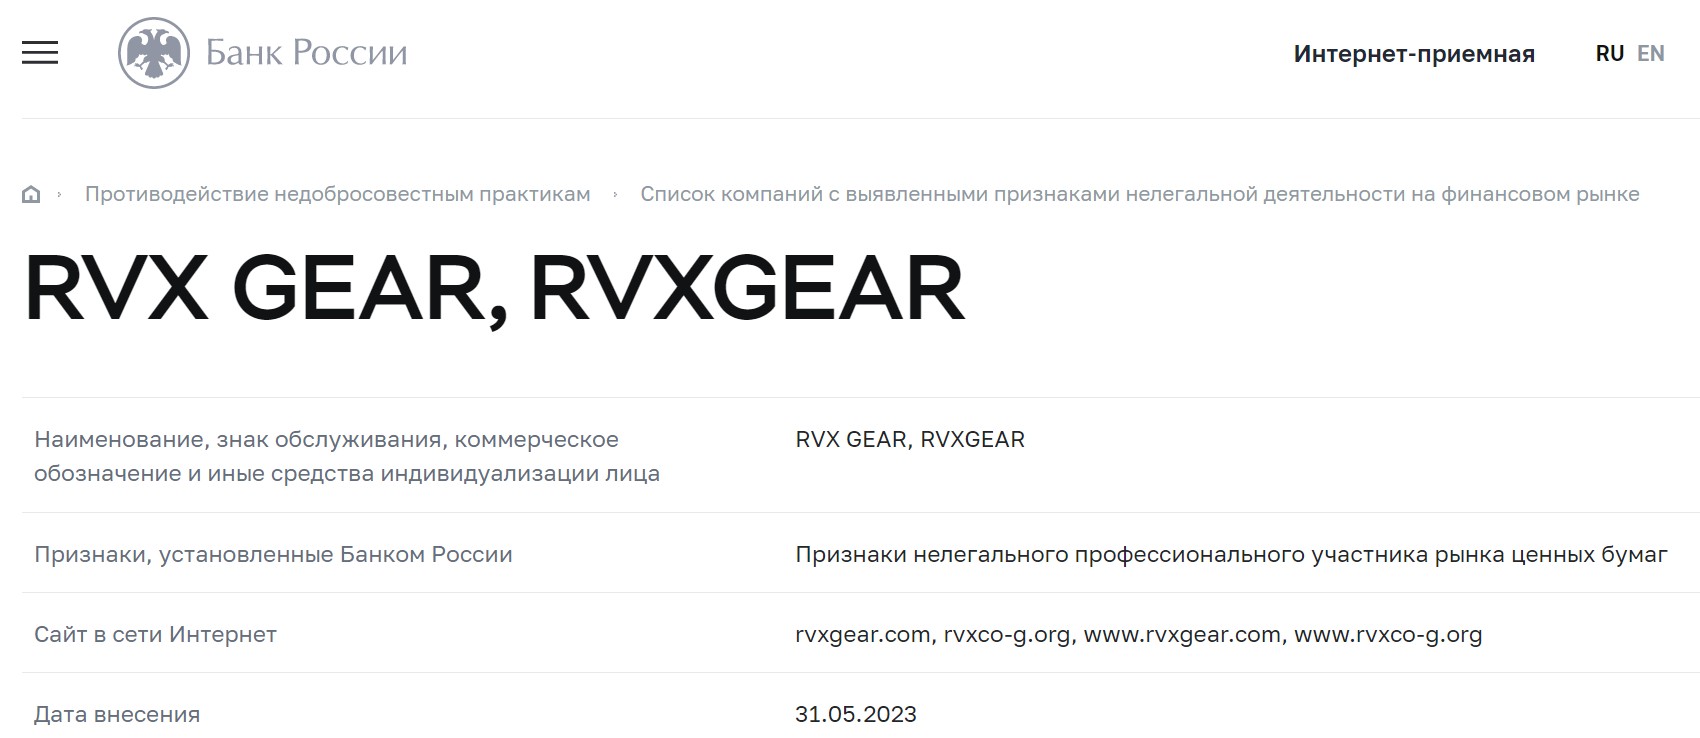 rvx gear брокер обзор